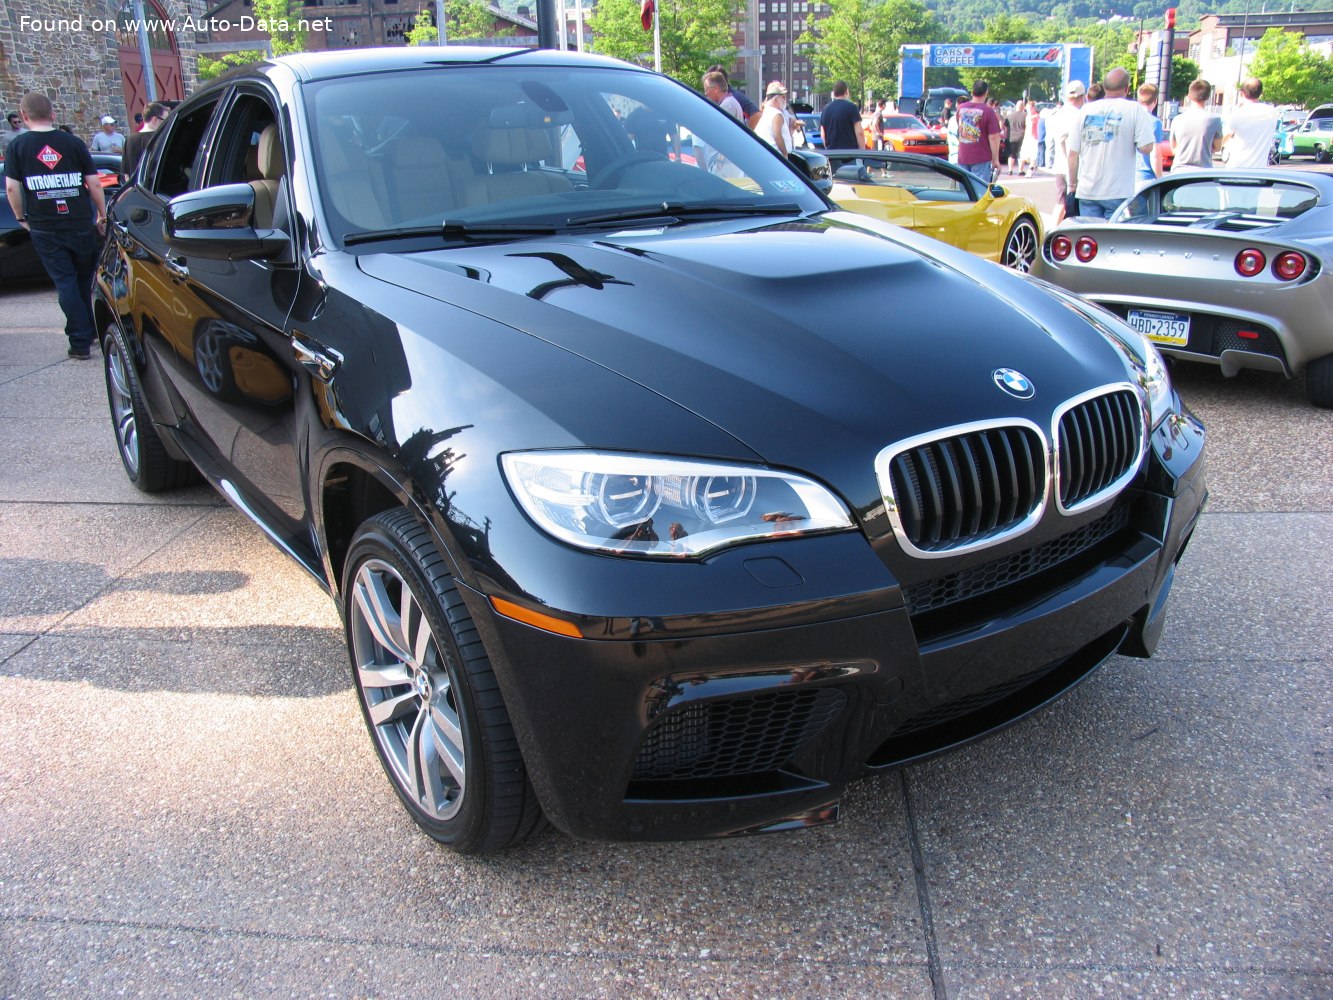 2012 BMW X6 M (E71 facelift 2012) 4.4 V8 (560 Hp) Steptronic | Technical  specs, data, fuel consumption, Dimensions